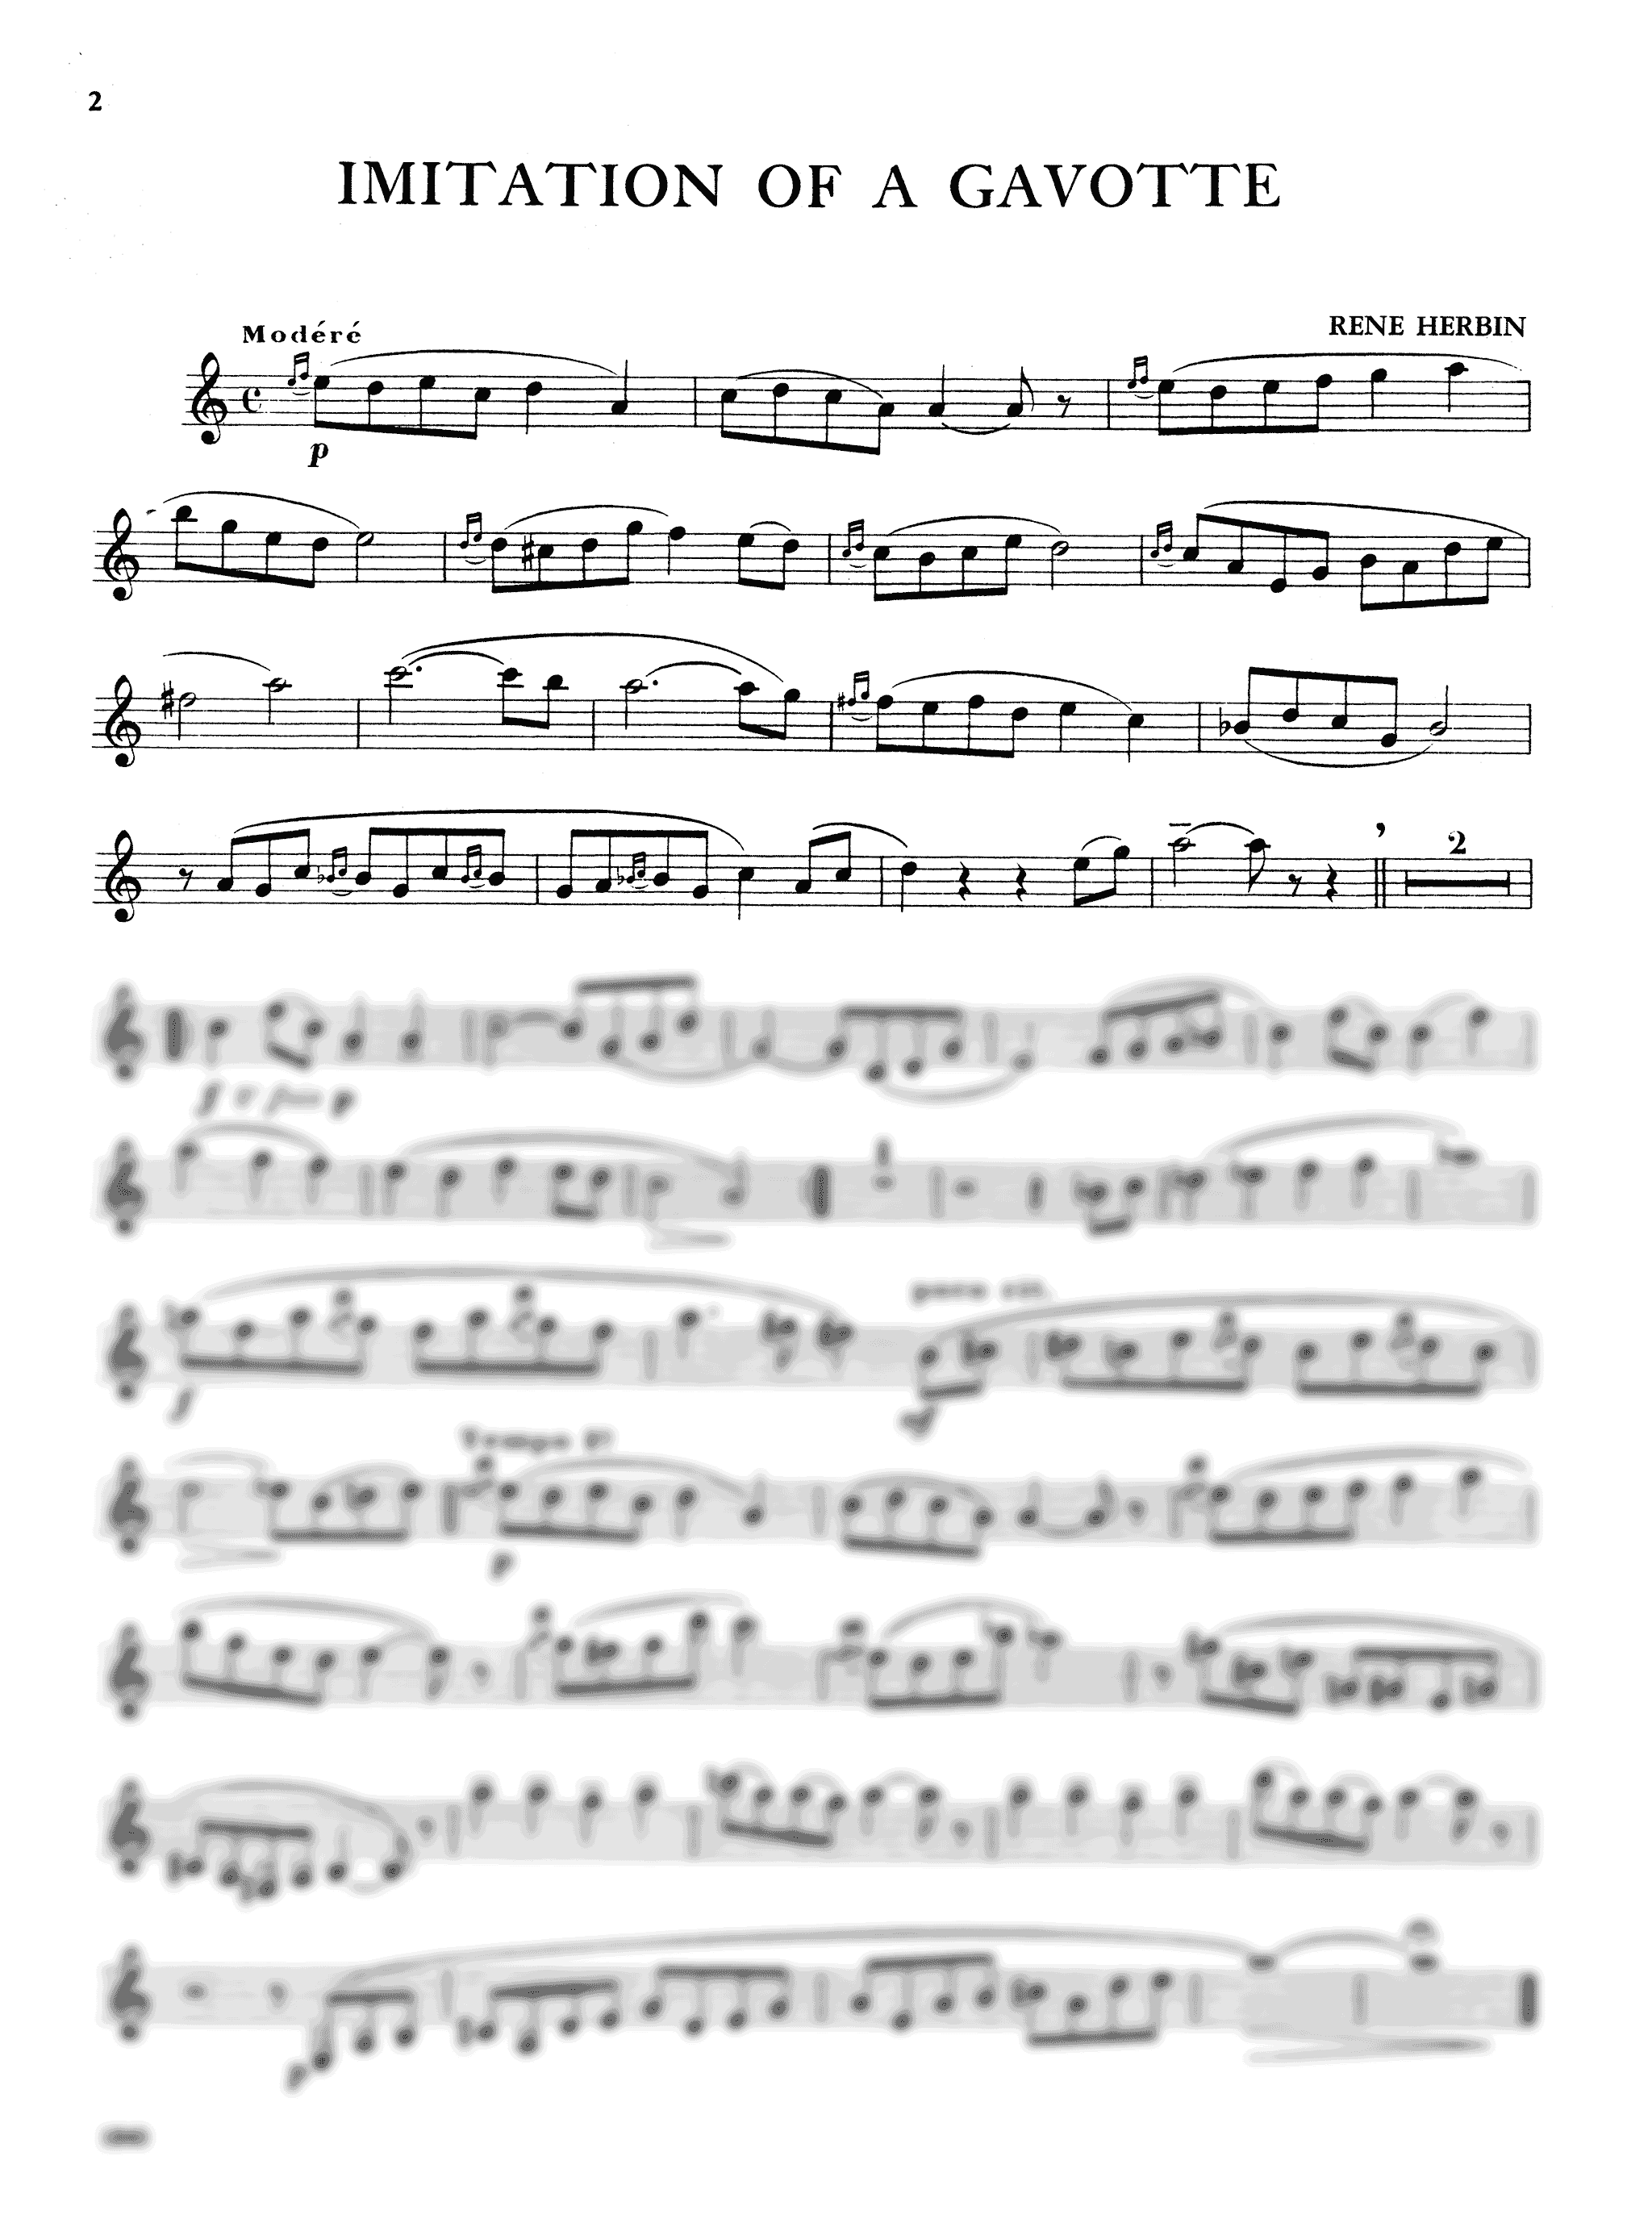 Herbin Imitation of a Gavotte Clarinet part